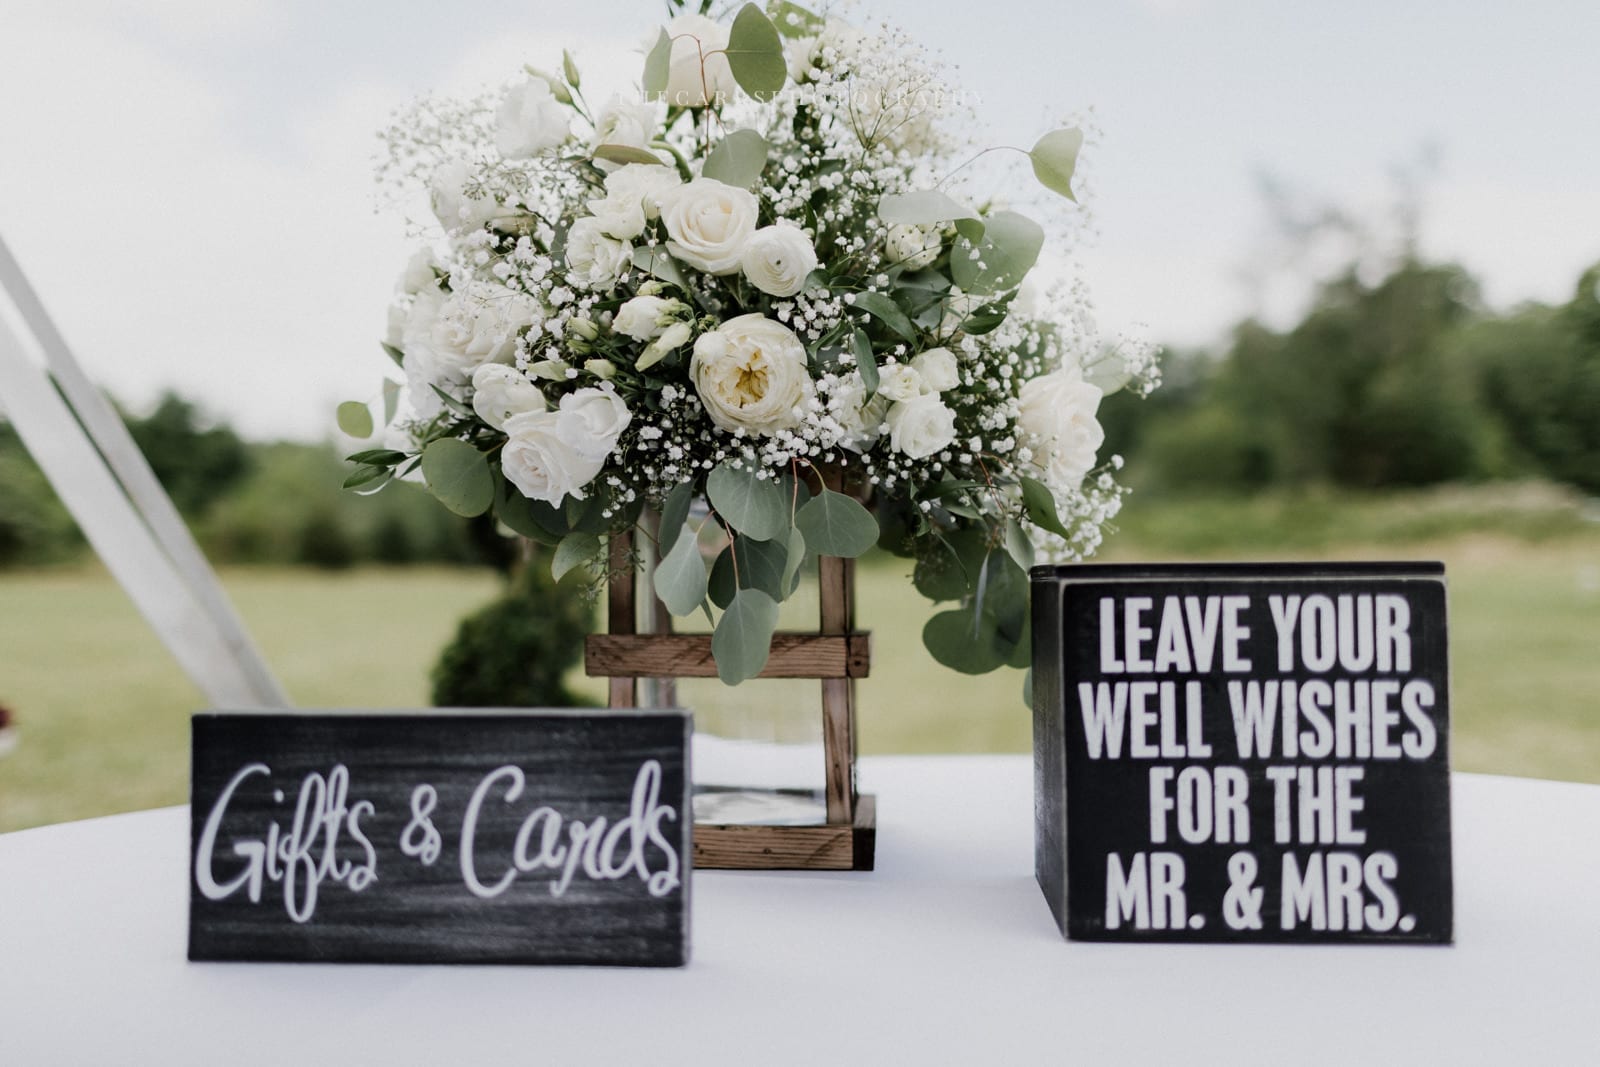 gift and cards at lake house wedding - Akron Ohio Wedding Photographer